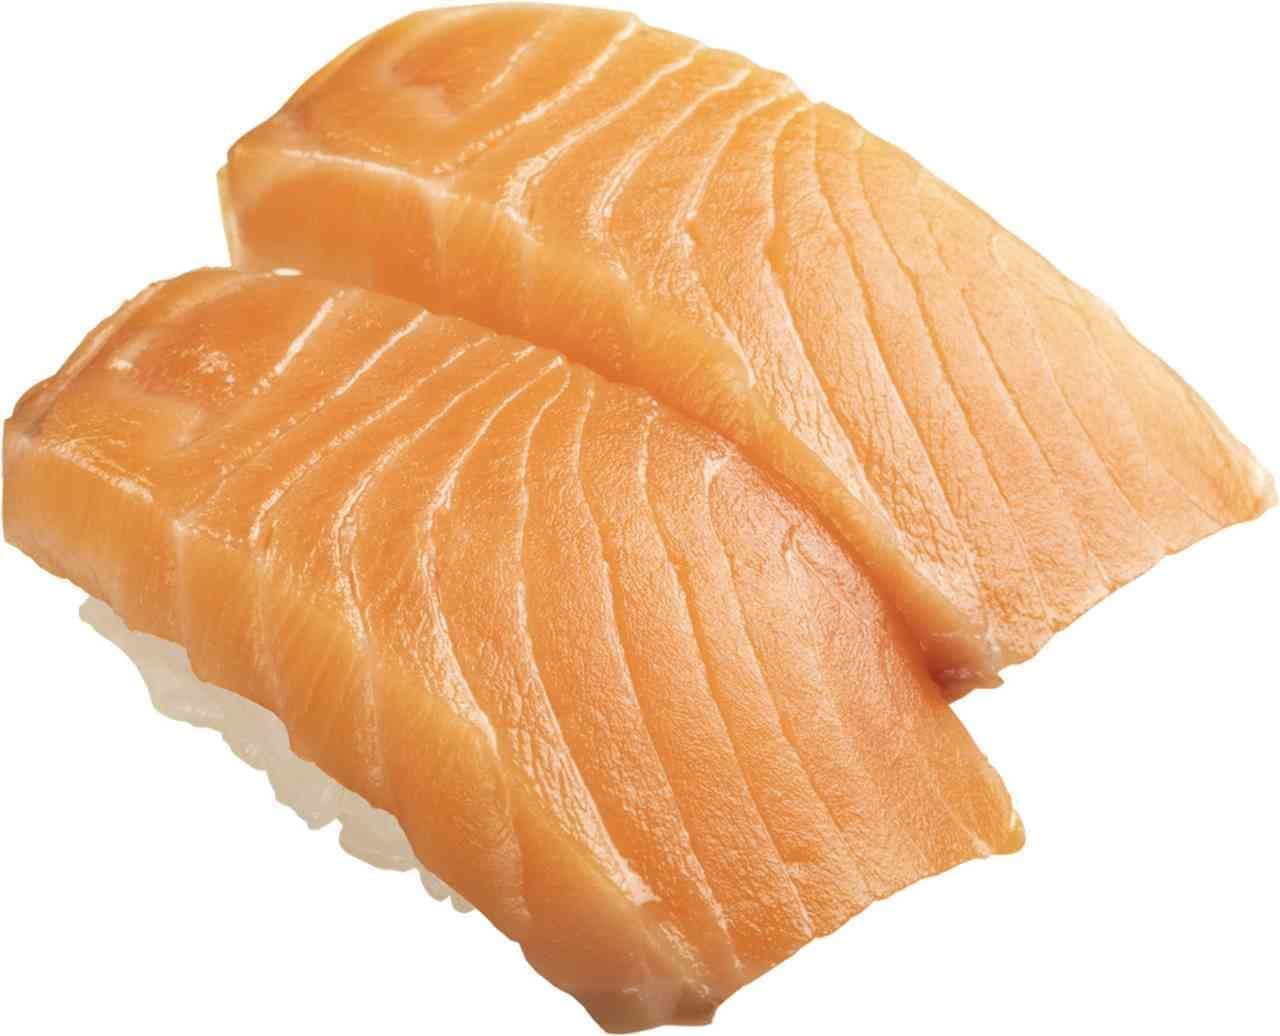 Sushiro's 100 yen Festival "Chopped Salmon